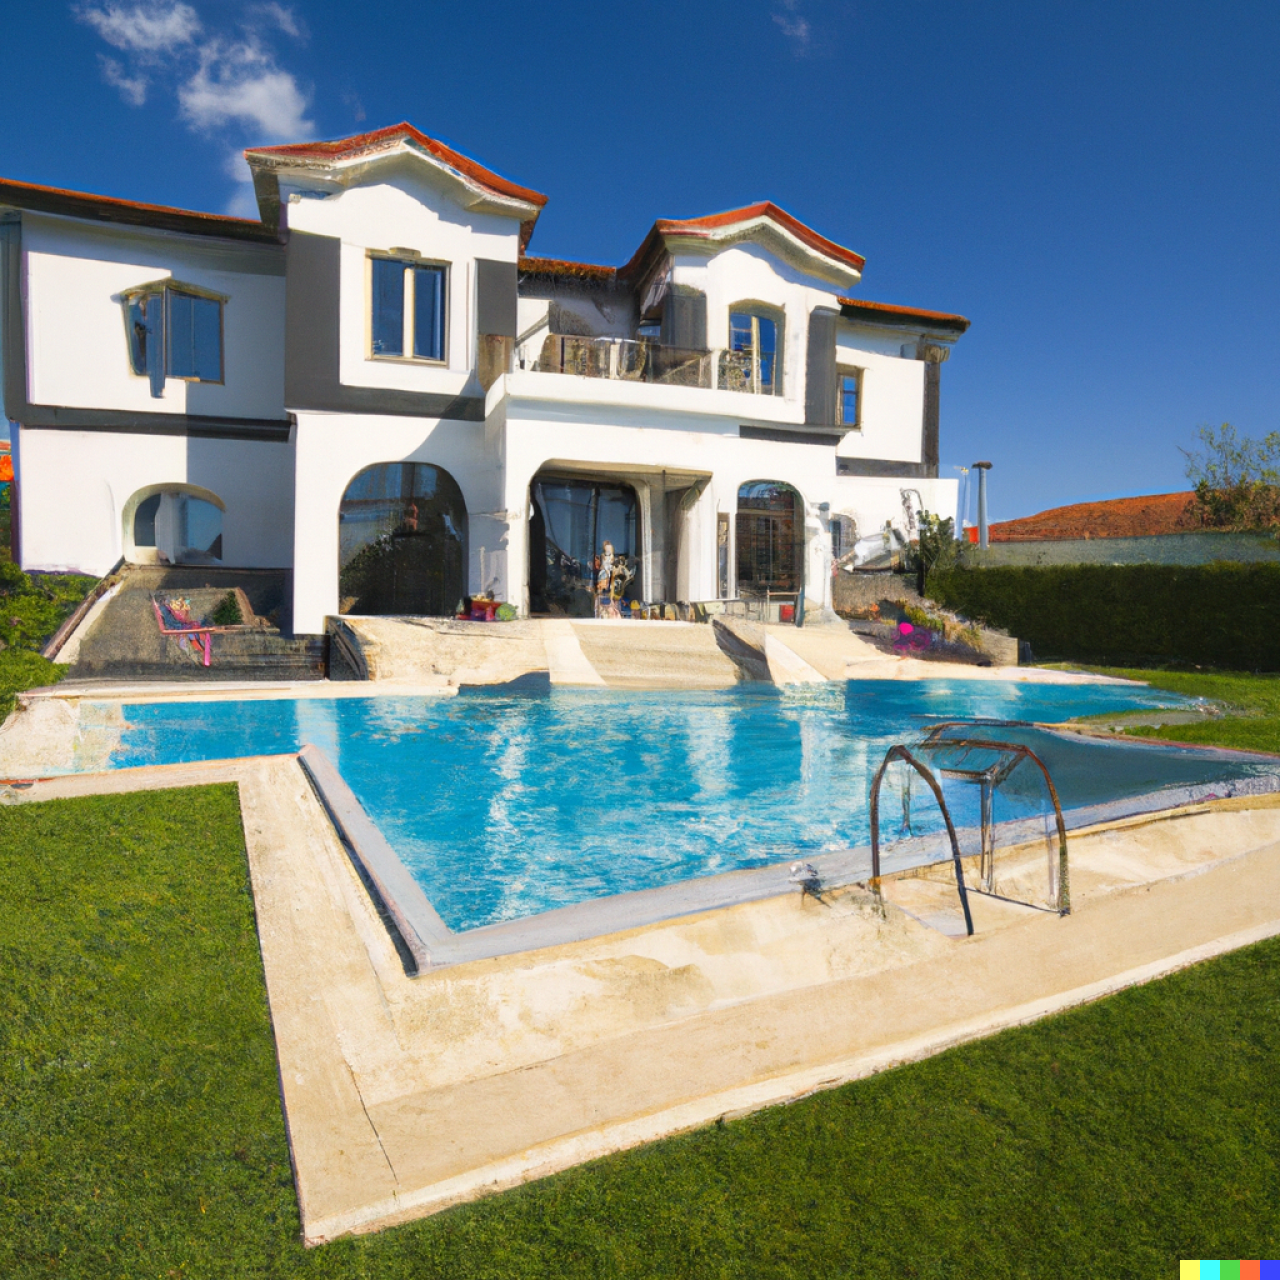 Italian_luxury_villa_with_swimming_pool.png